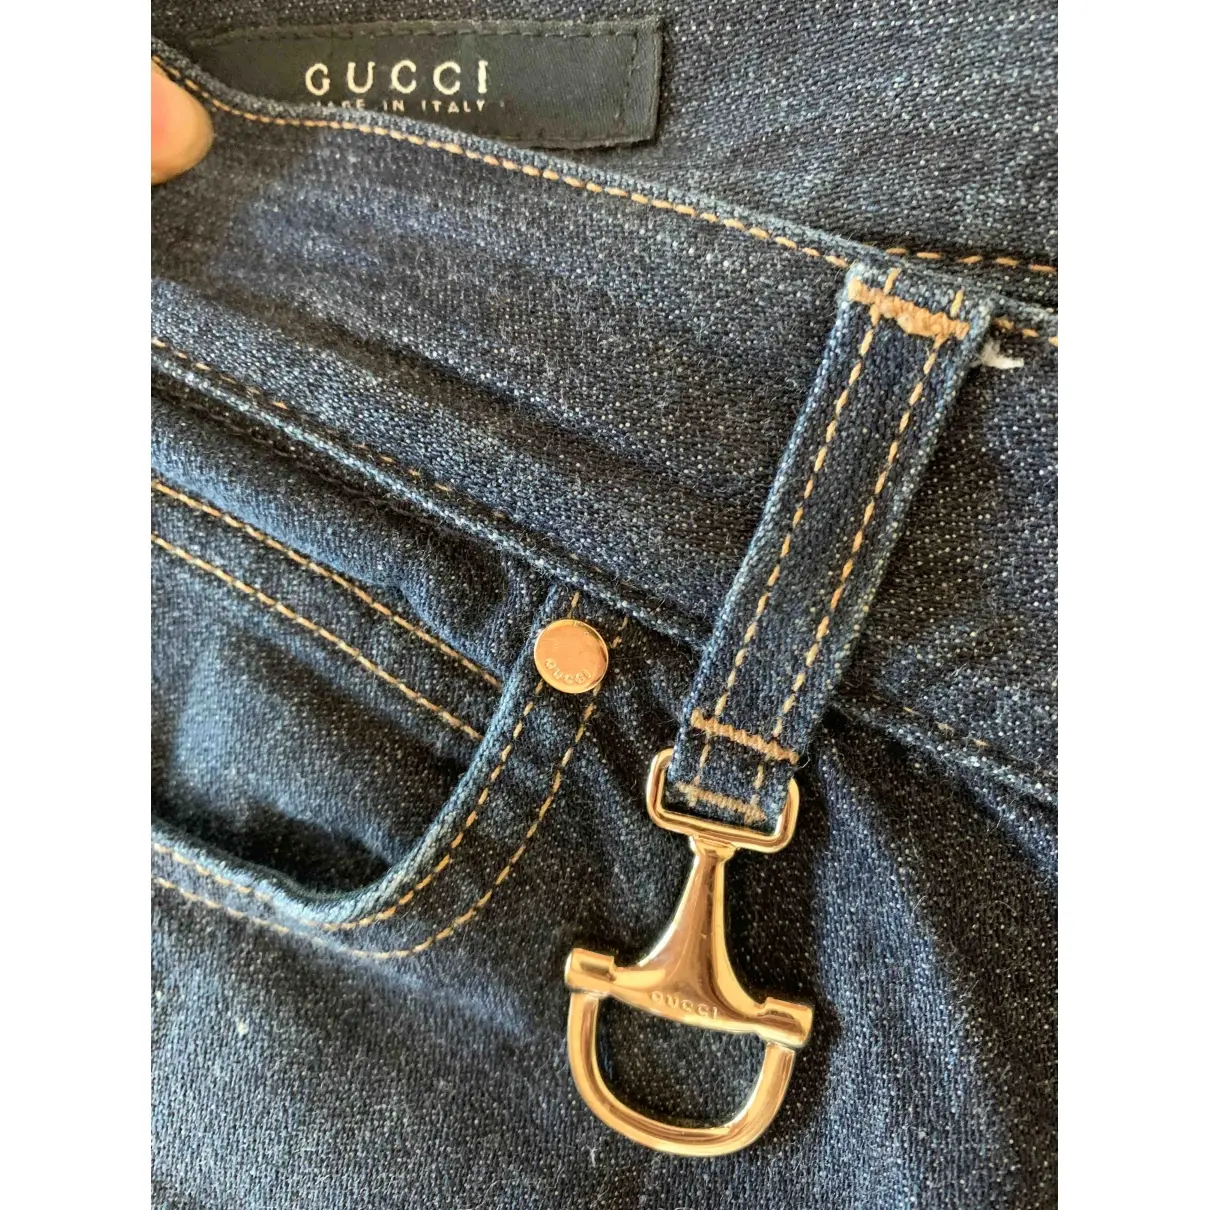 Luxury Gucci Jeans Women - Vintage